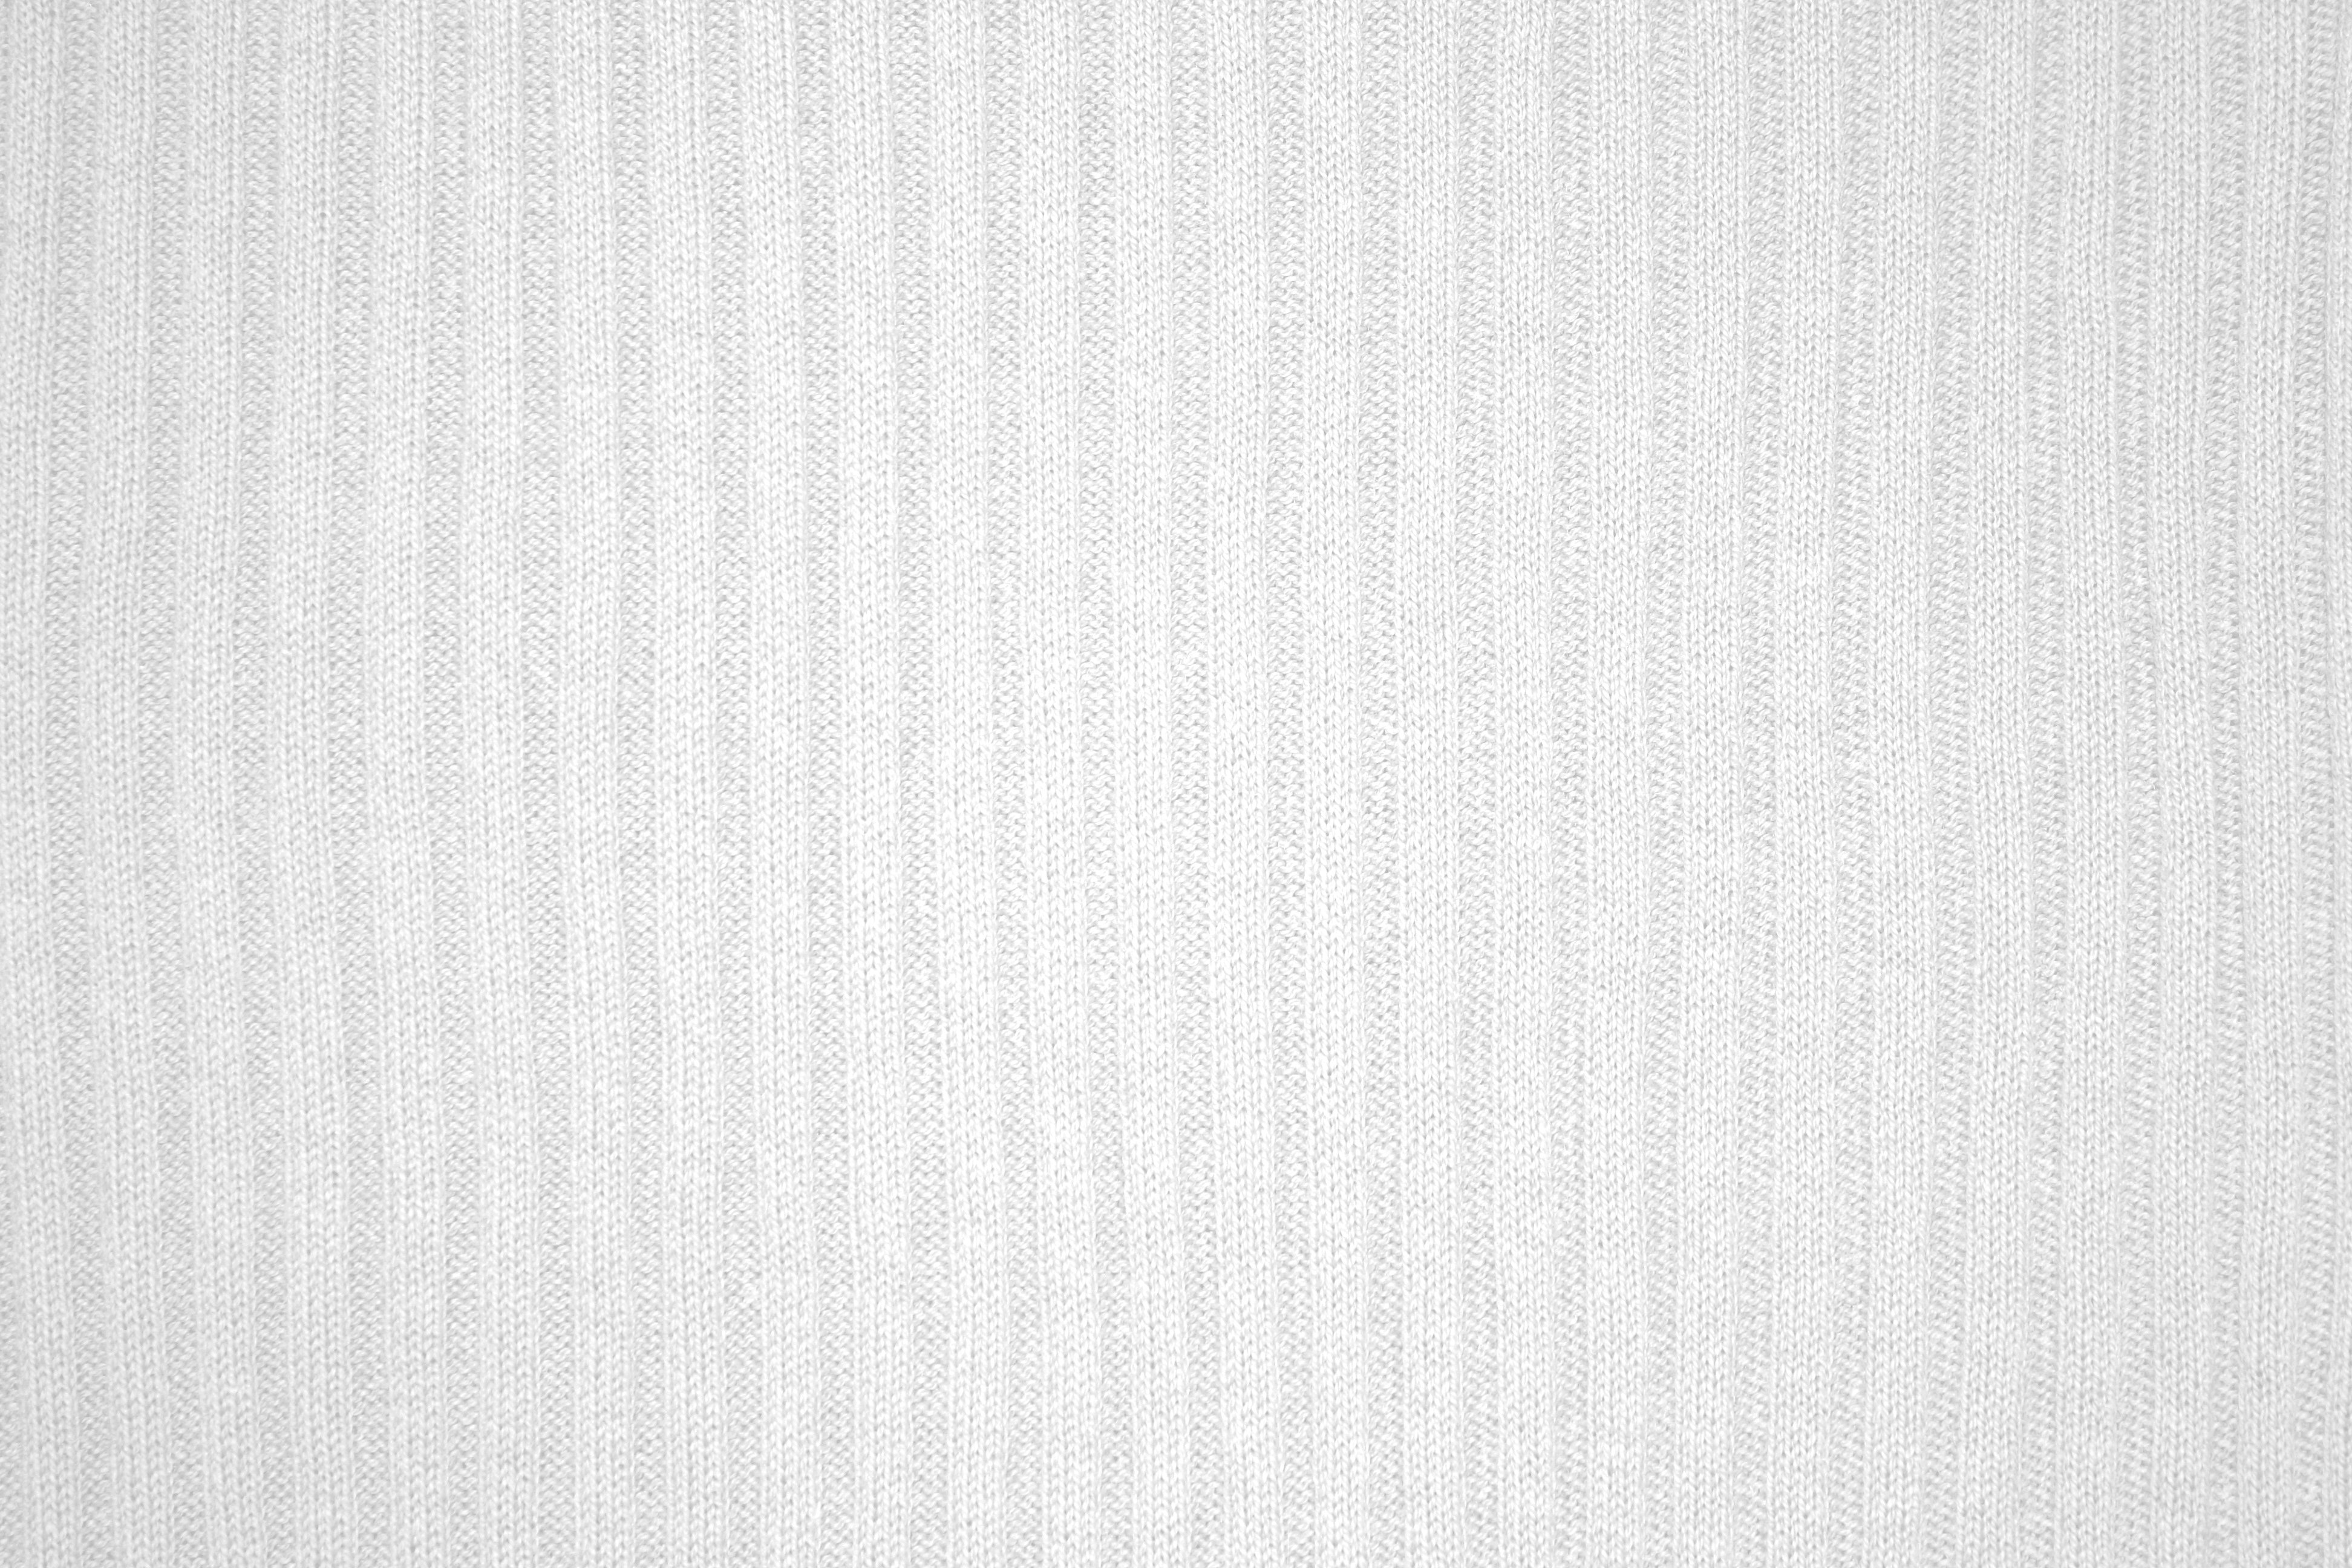 https://www.photos-public-domain.com/wp-content/uploads/2011/02/white-ribbed-knit-texture.jpg